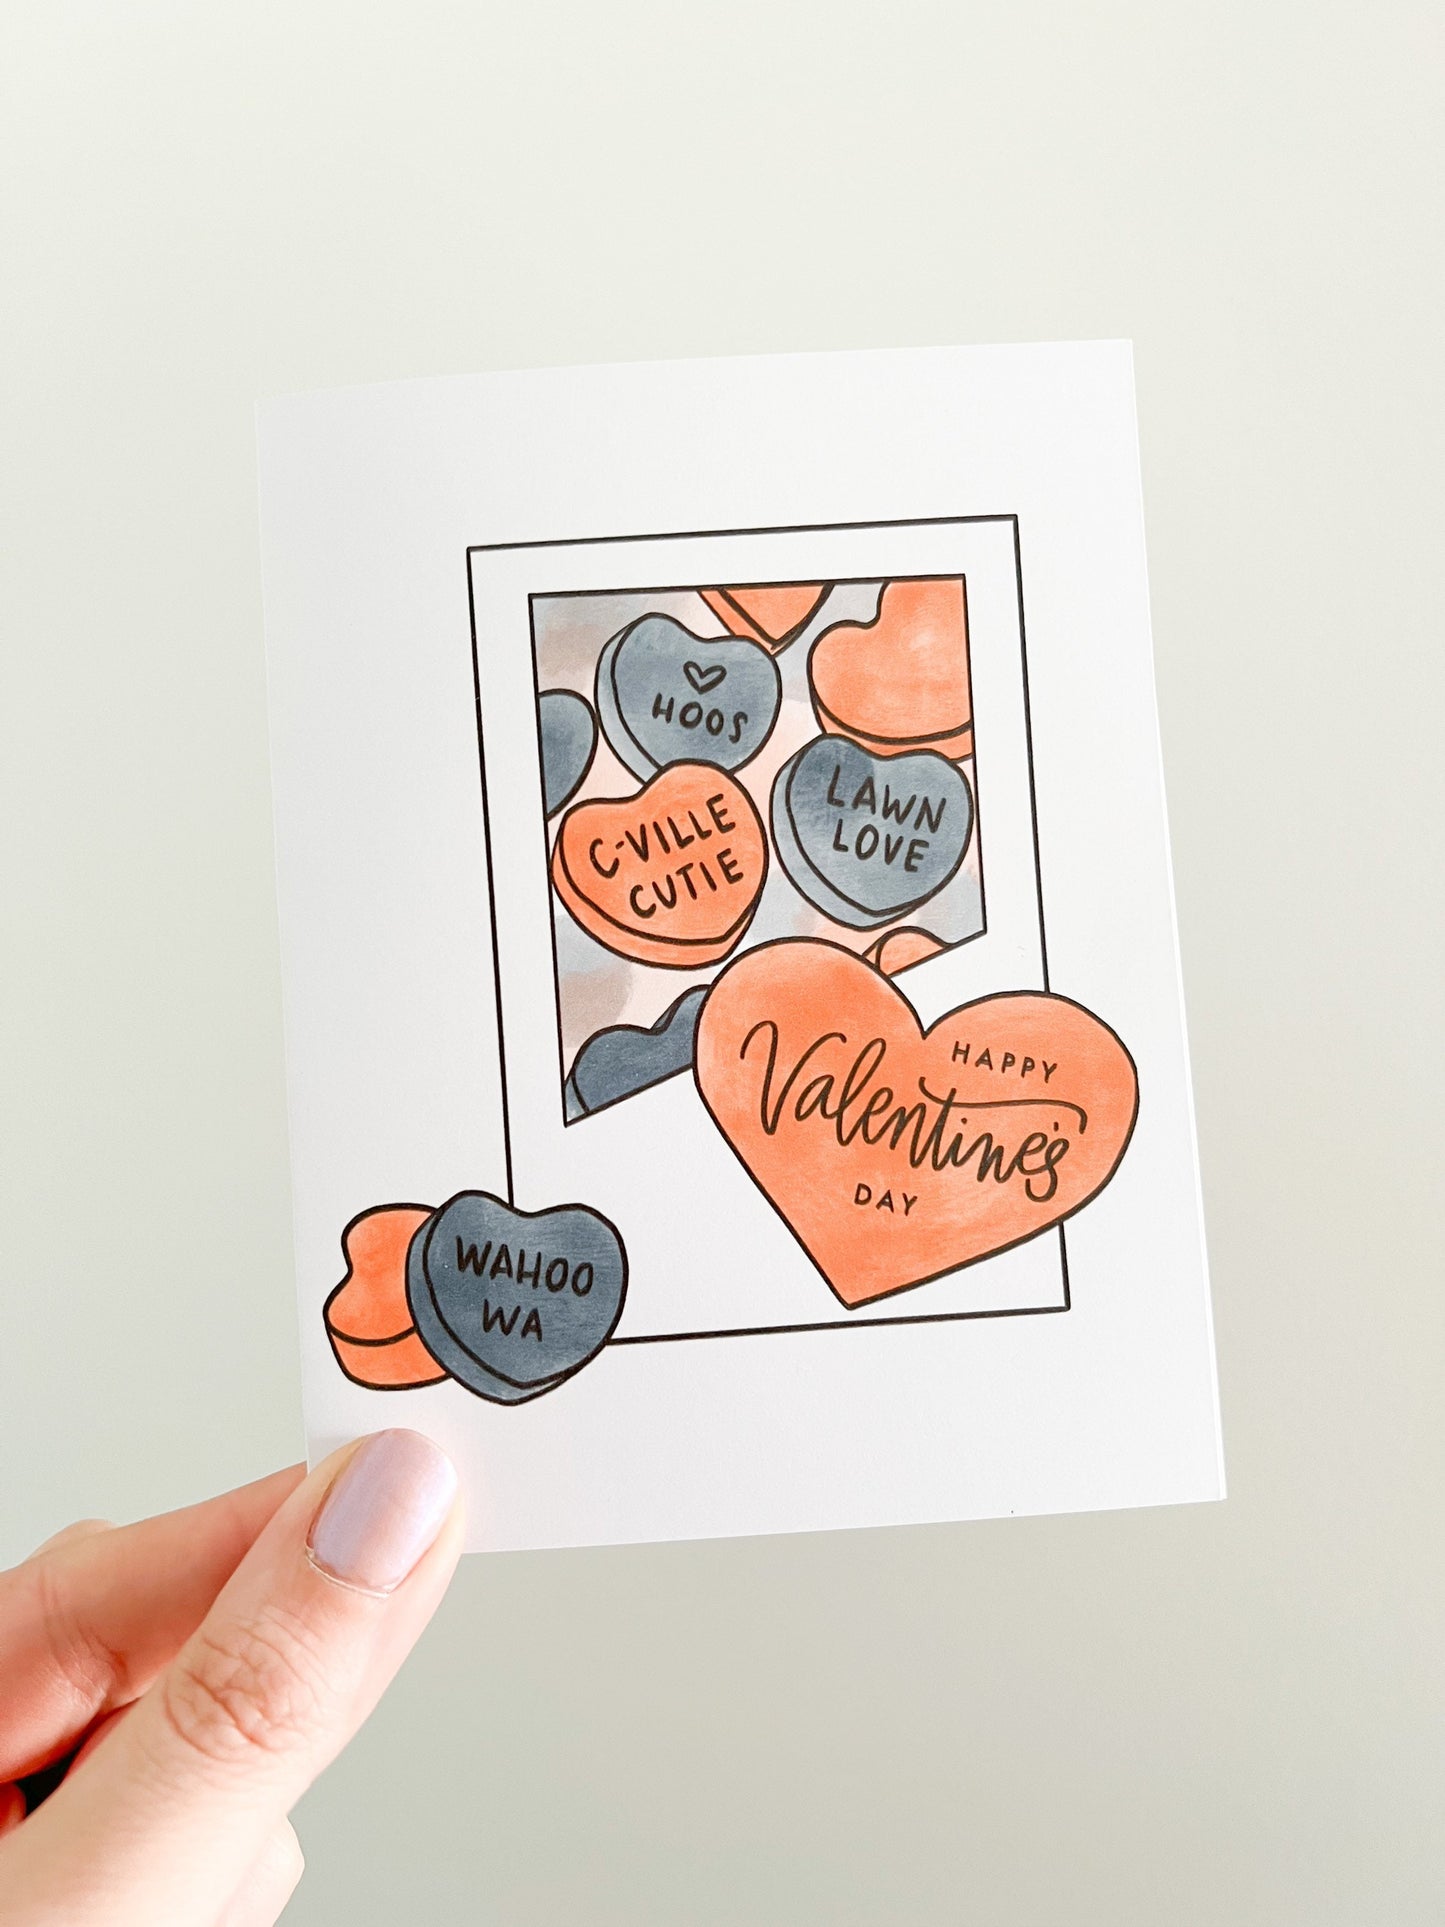 Charlottesville candy hearts - Valentine’s Day card - UVA - Virginia